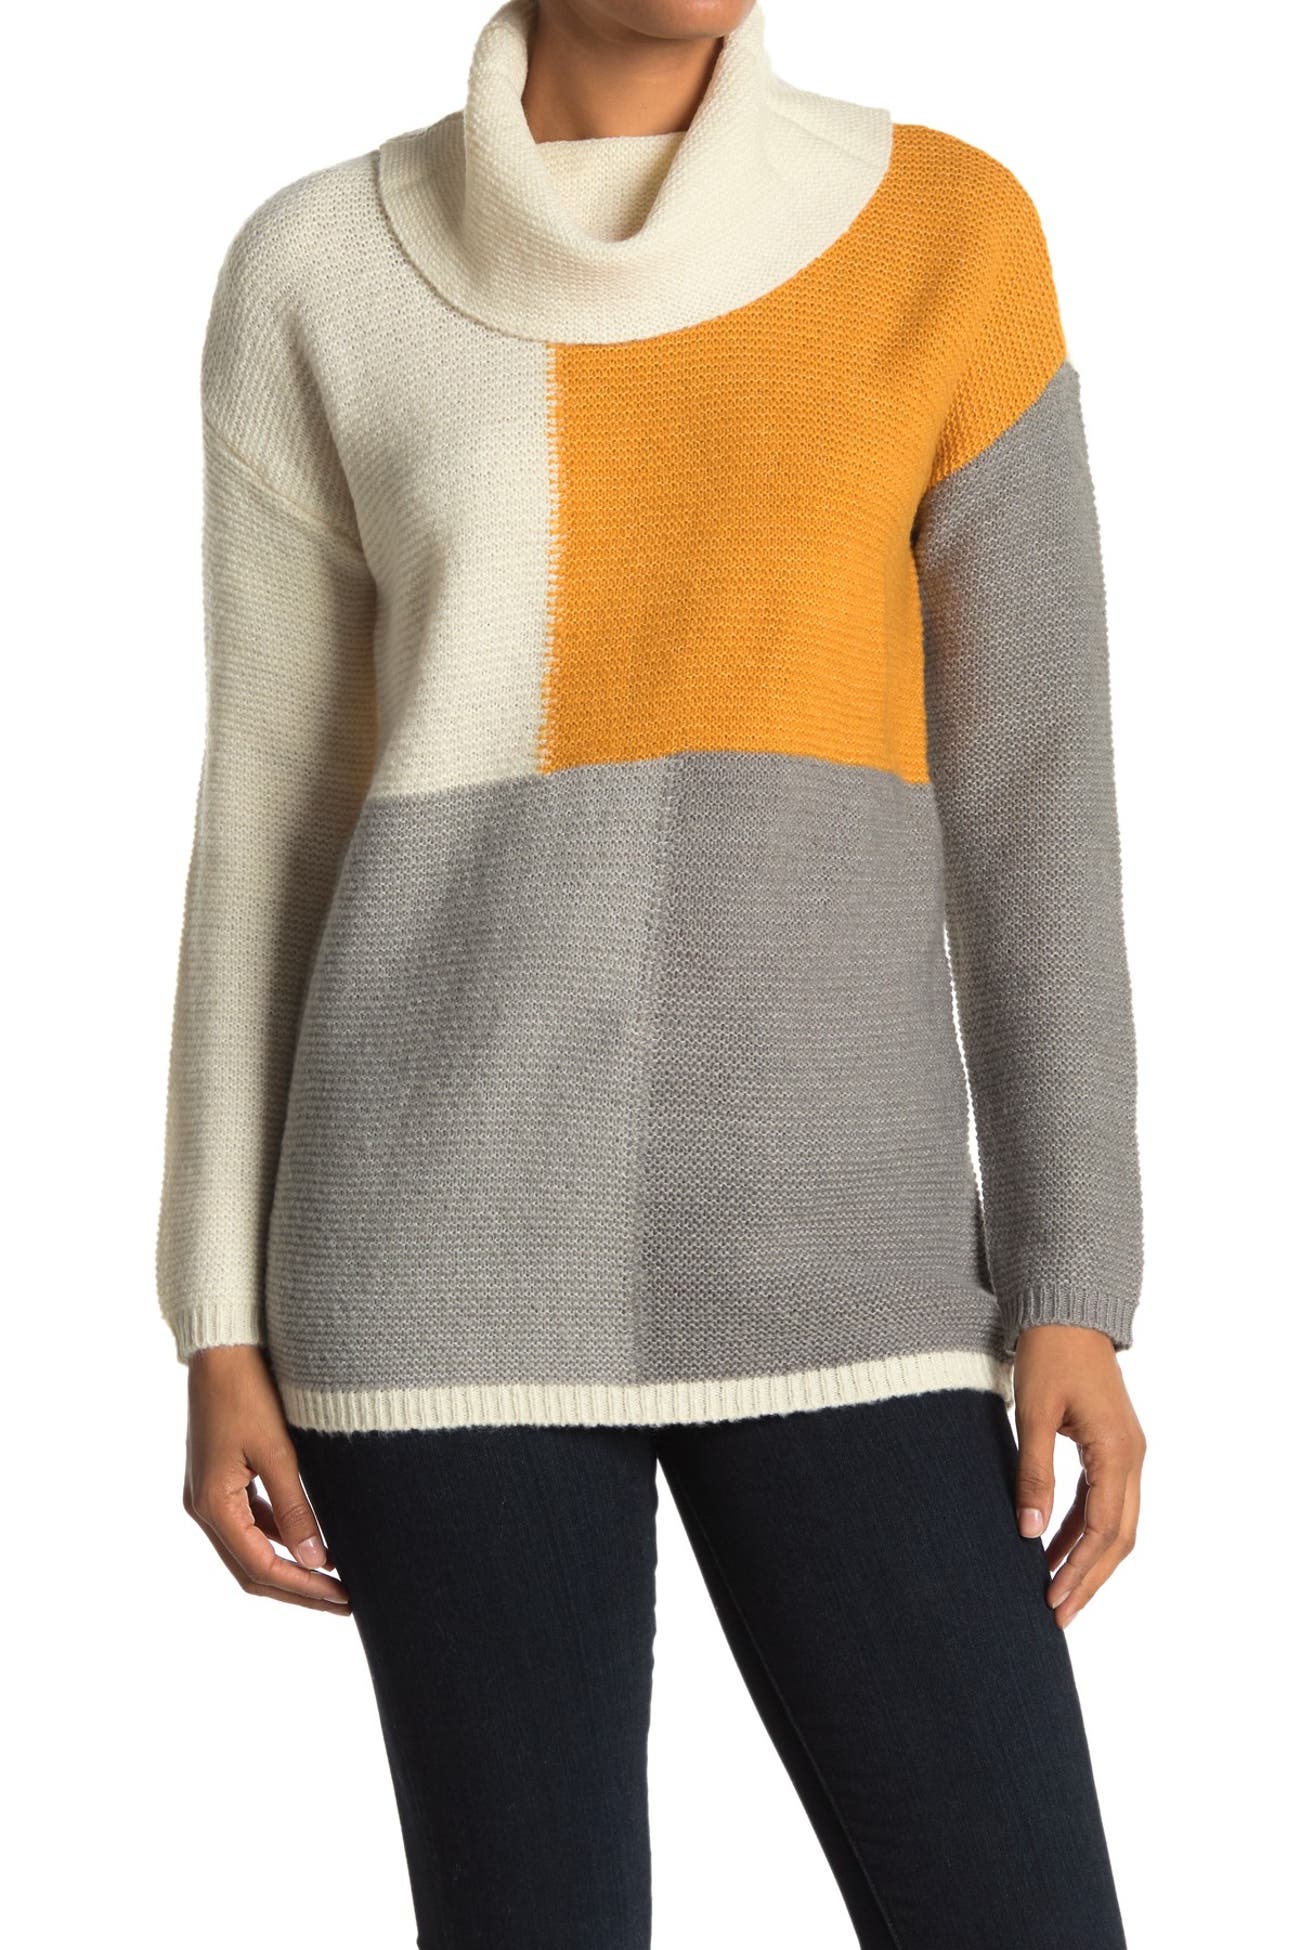 Cyrus | Colorblock Cowl Neck Sweater | Nordstrom Rack